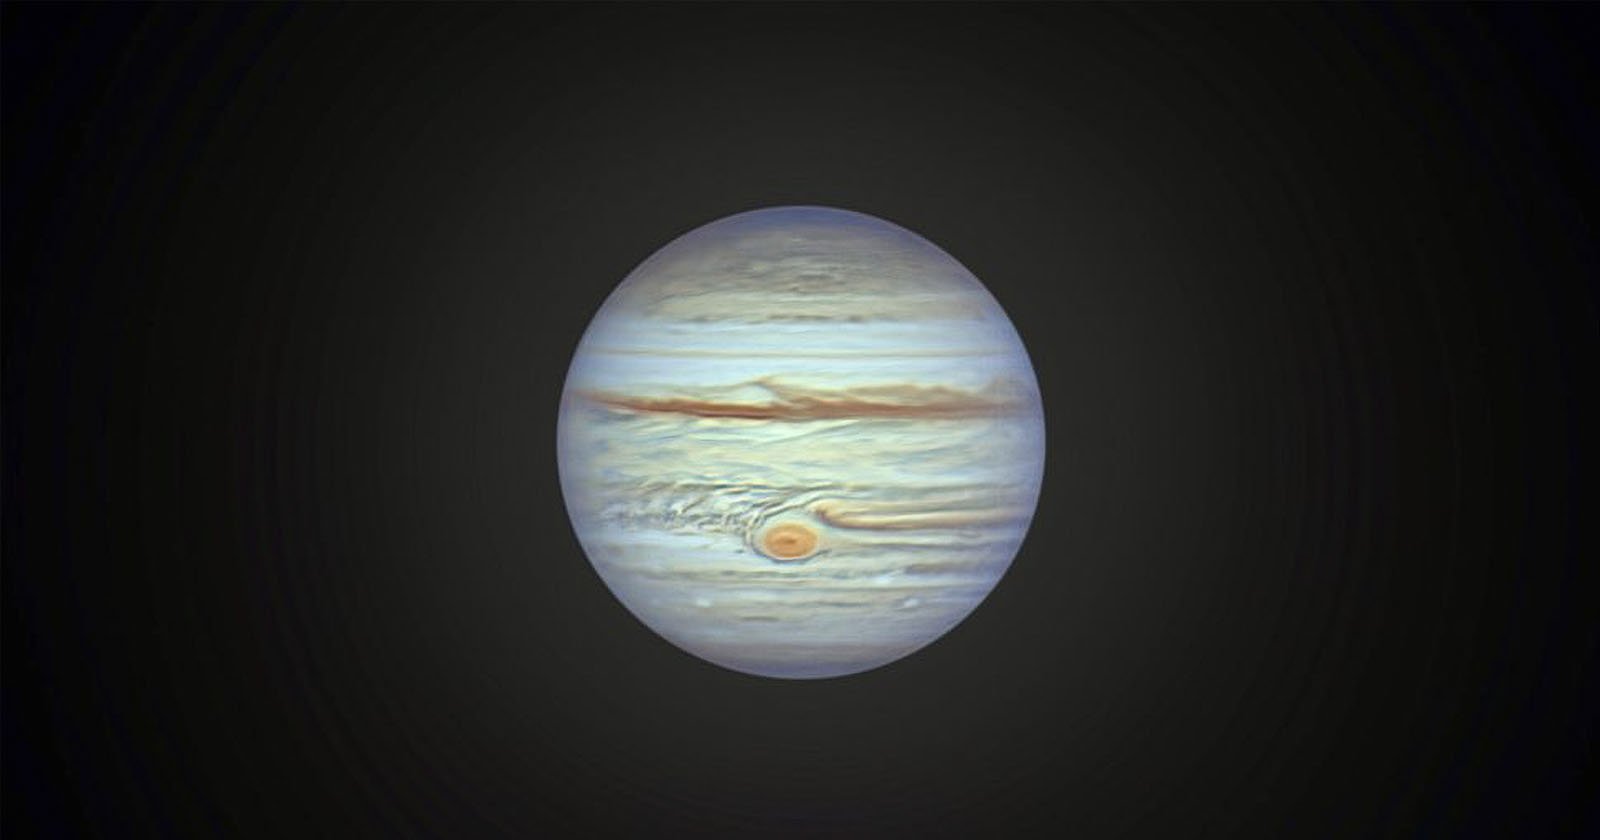 Sensational Jupiter Image Made of 600,000 Photos as Nears Earth